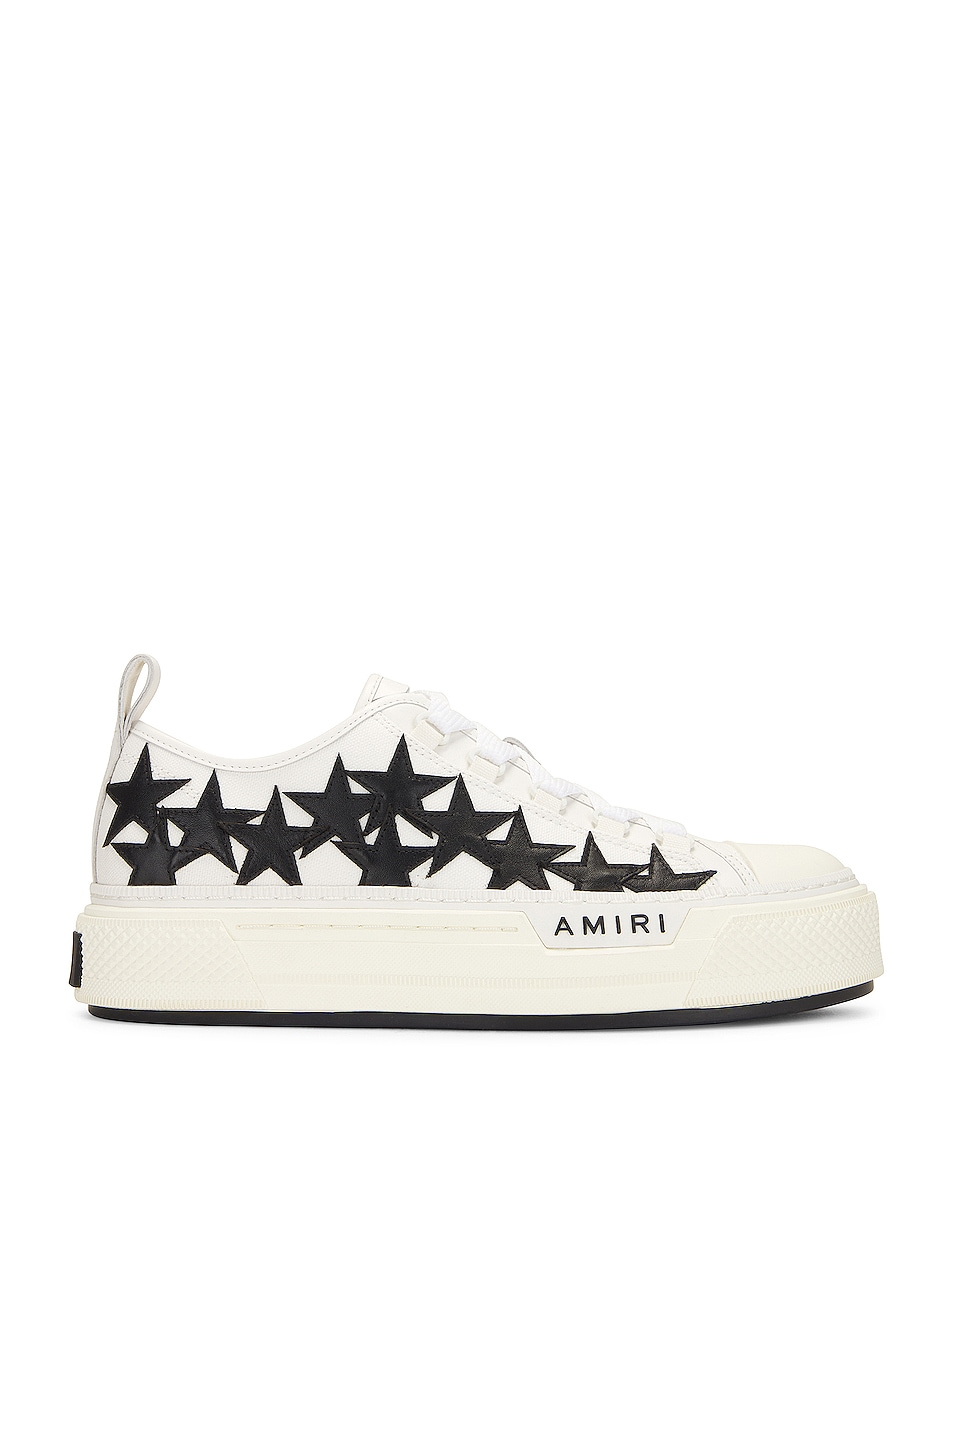 Amiri Stars Court Low Top Sneakers in White Black FWRD